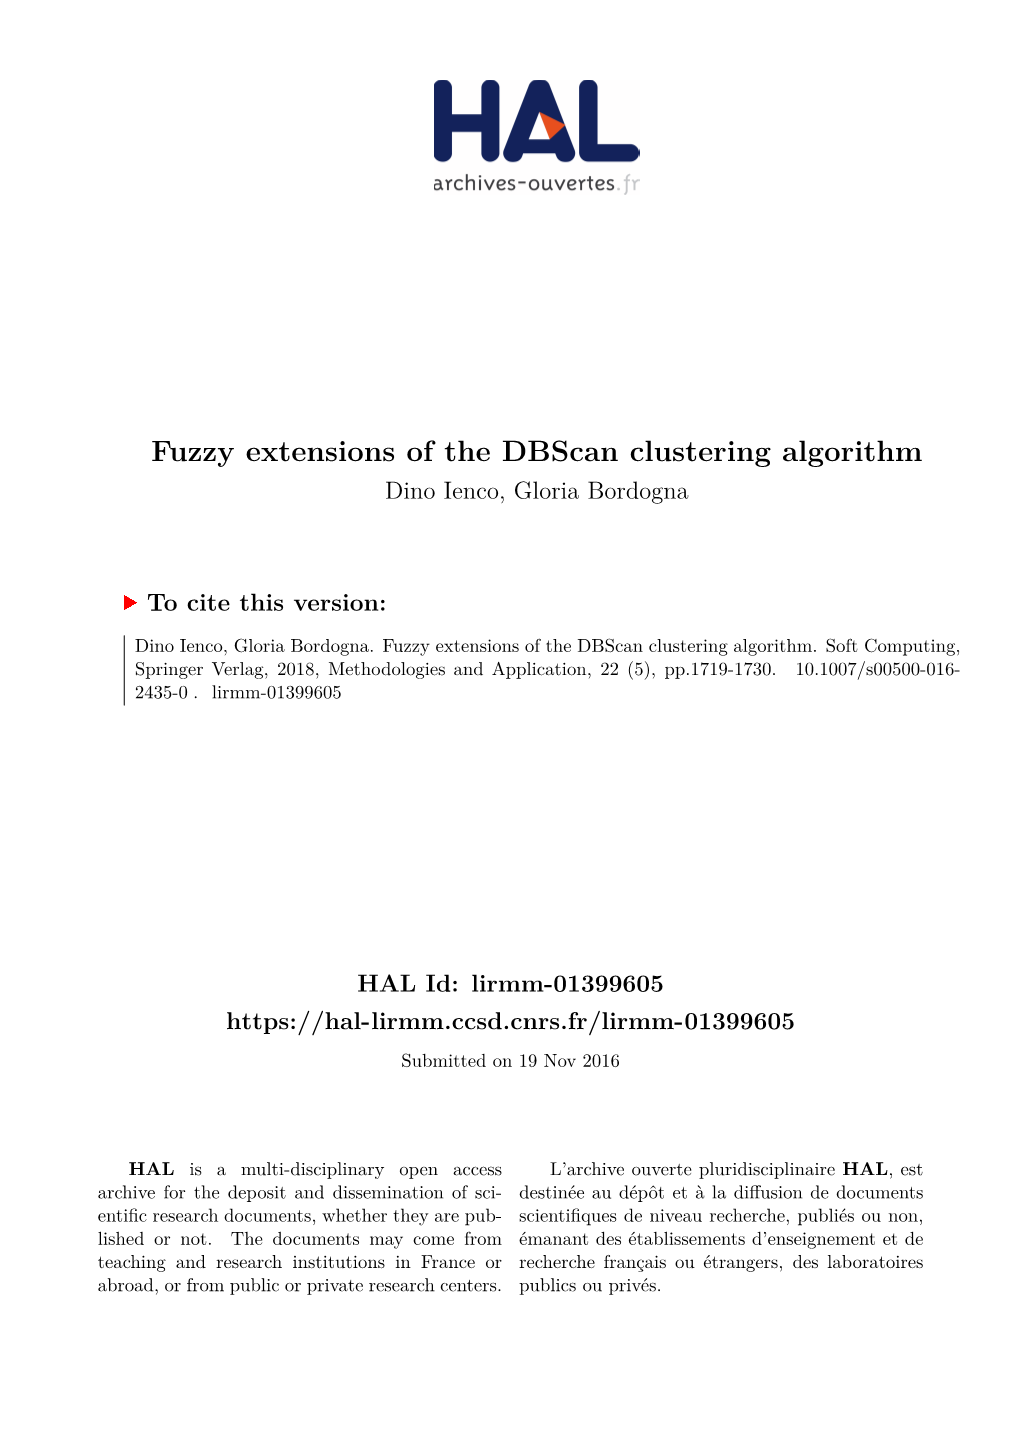 Fuzzy Extensions of the Dbscan Clustering Algorithm Dino Ienco, Gloria Bordogna